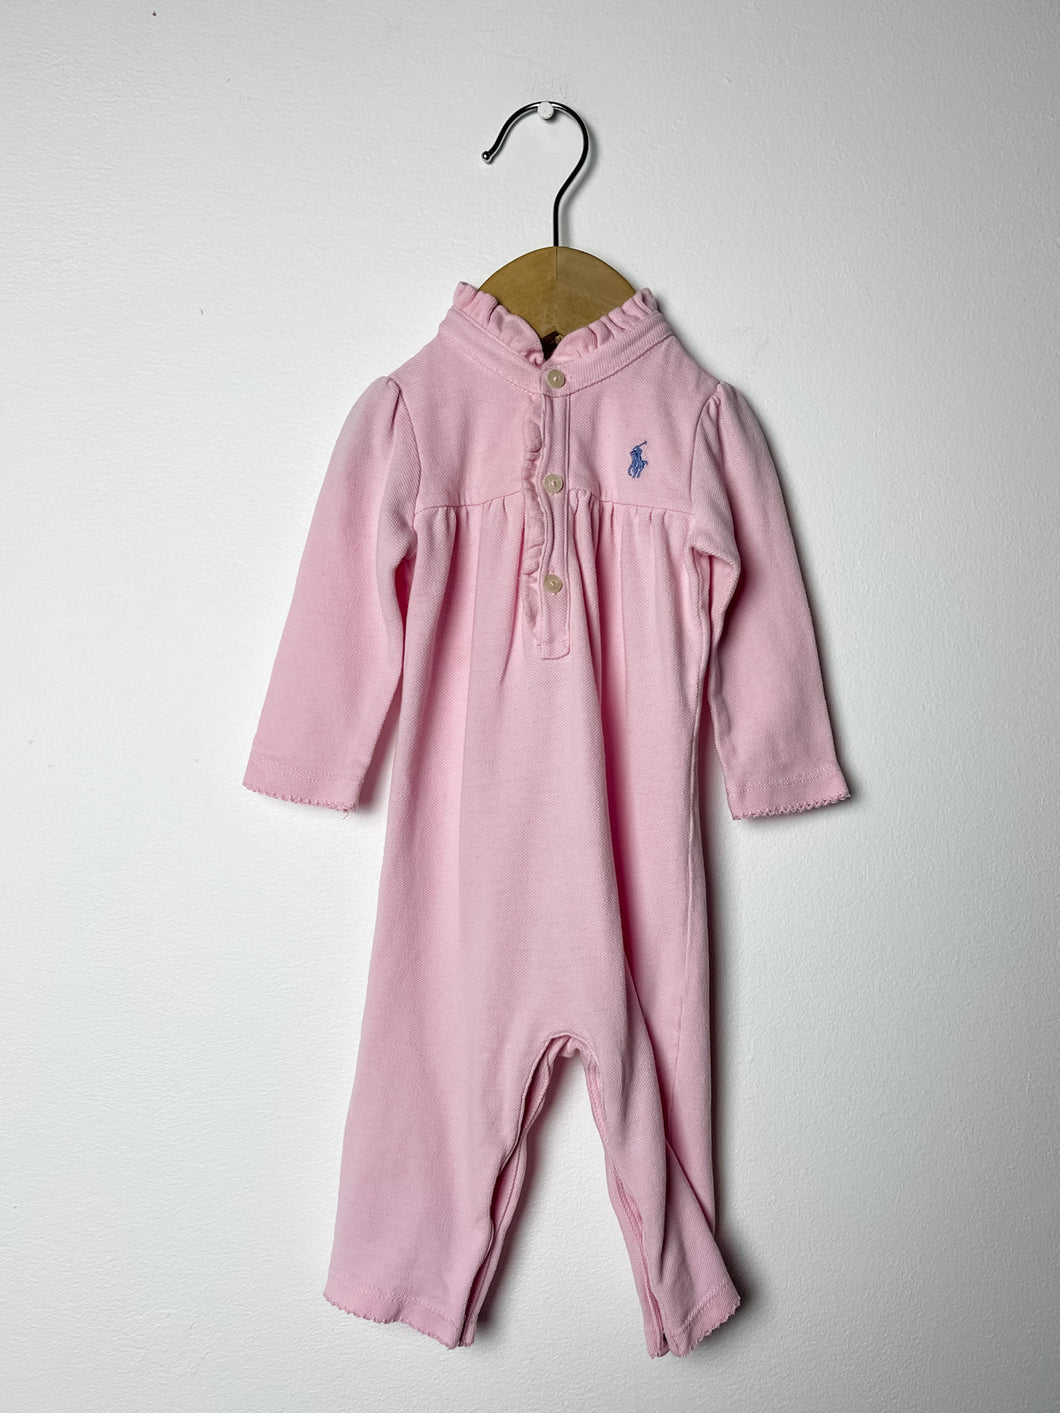 Pink Ralph Lauren Romper Size 6 Months